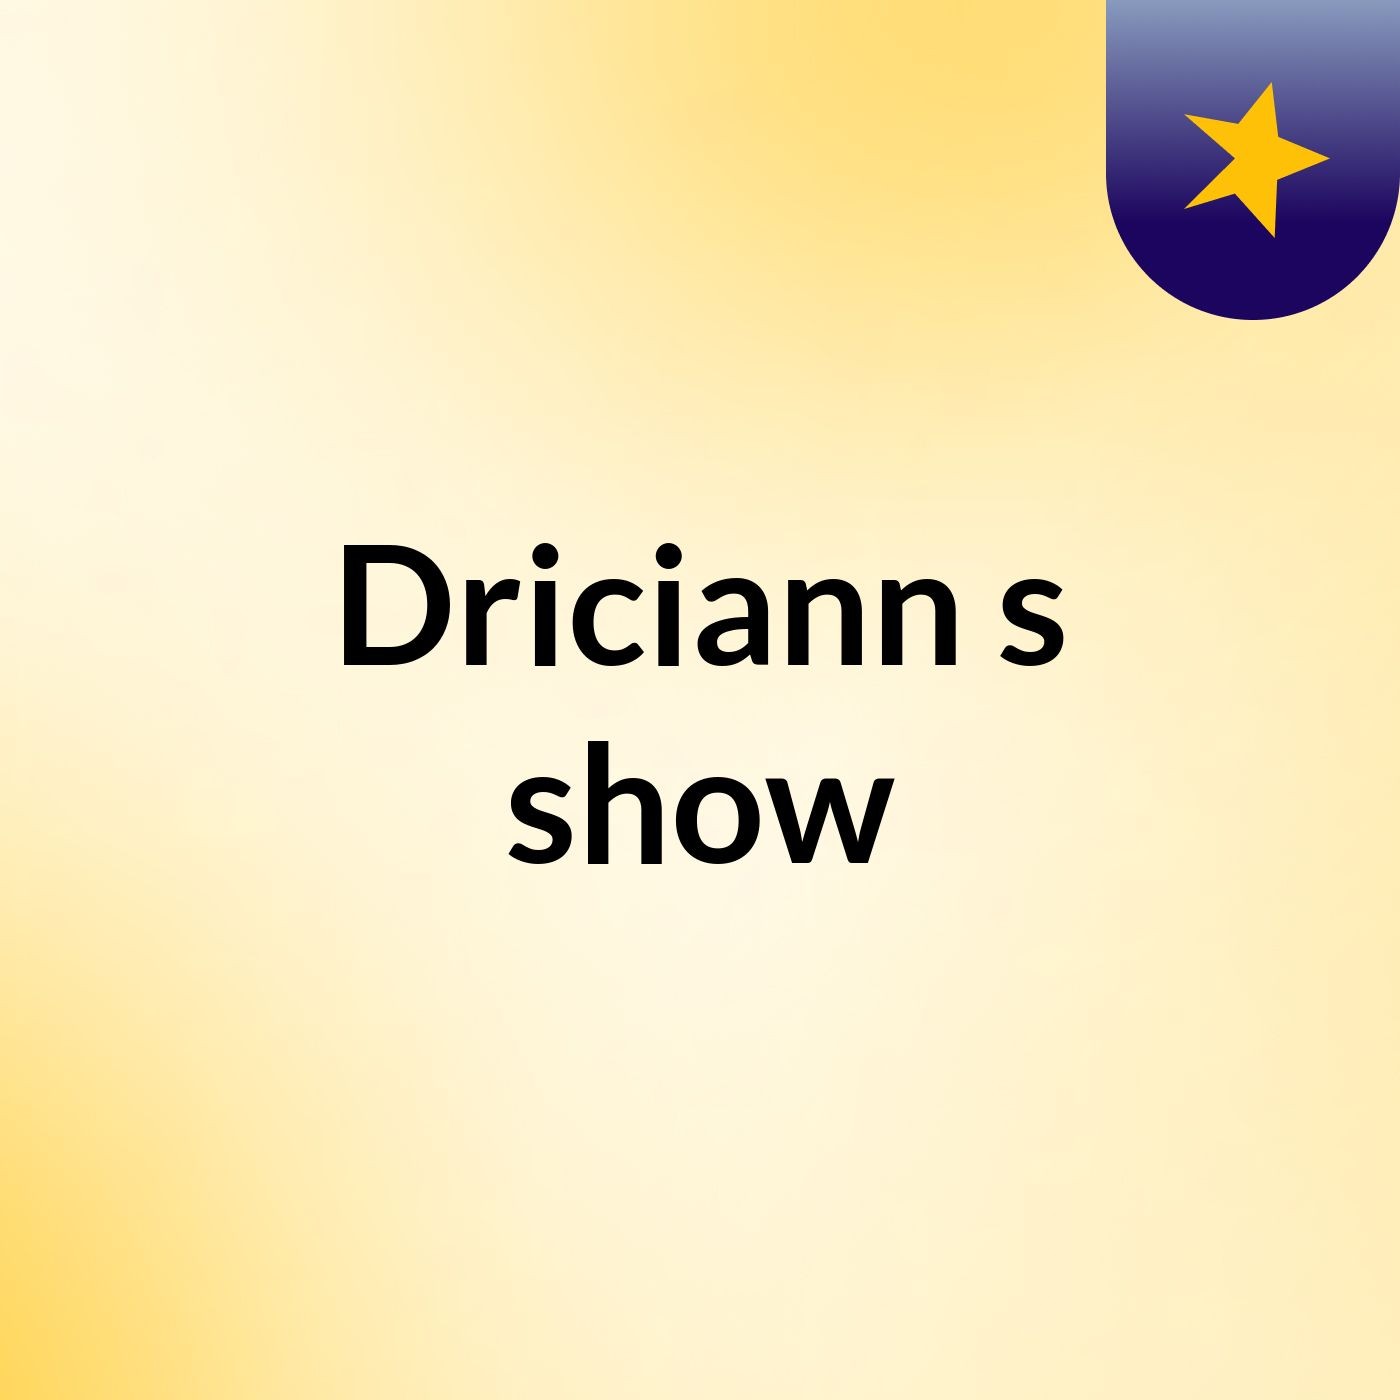 Driciann's show